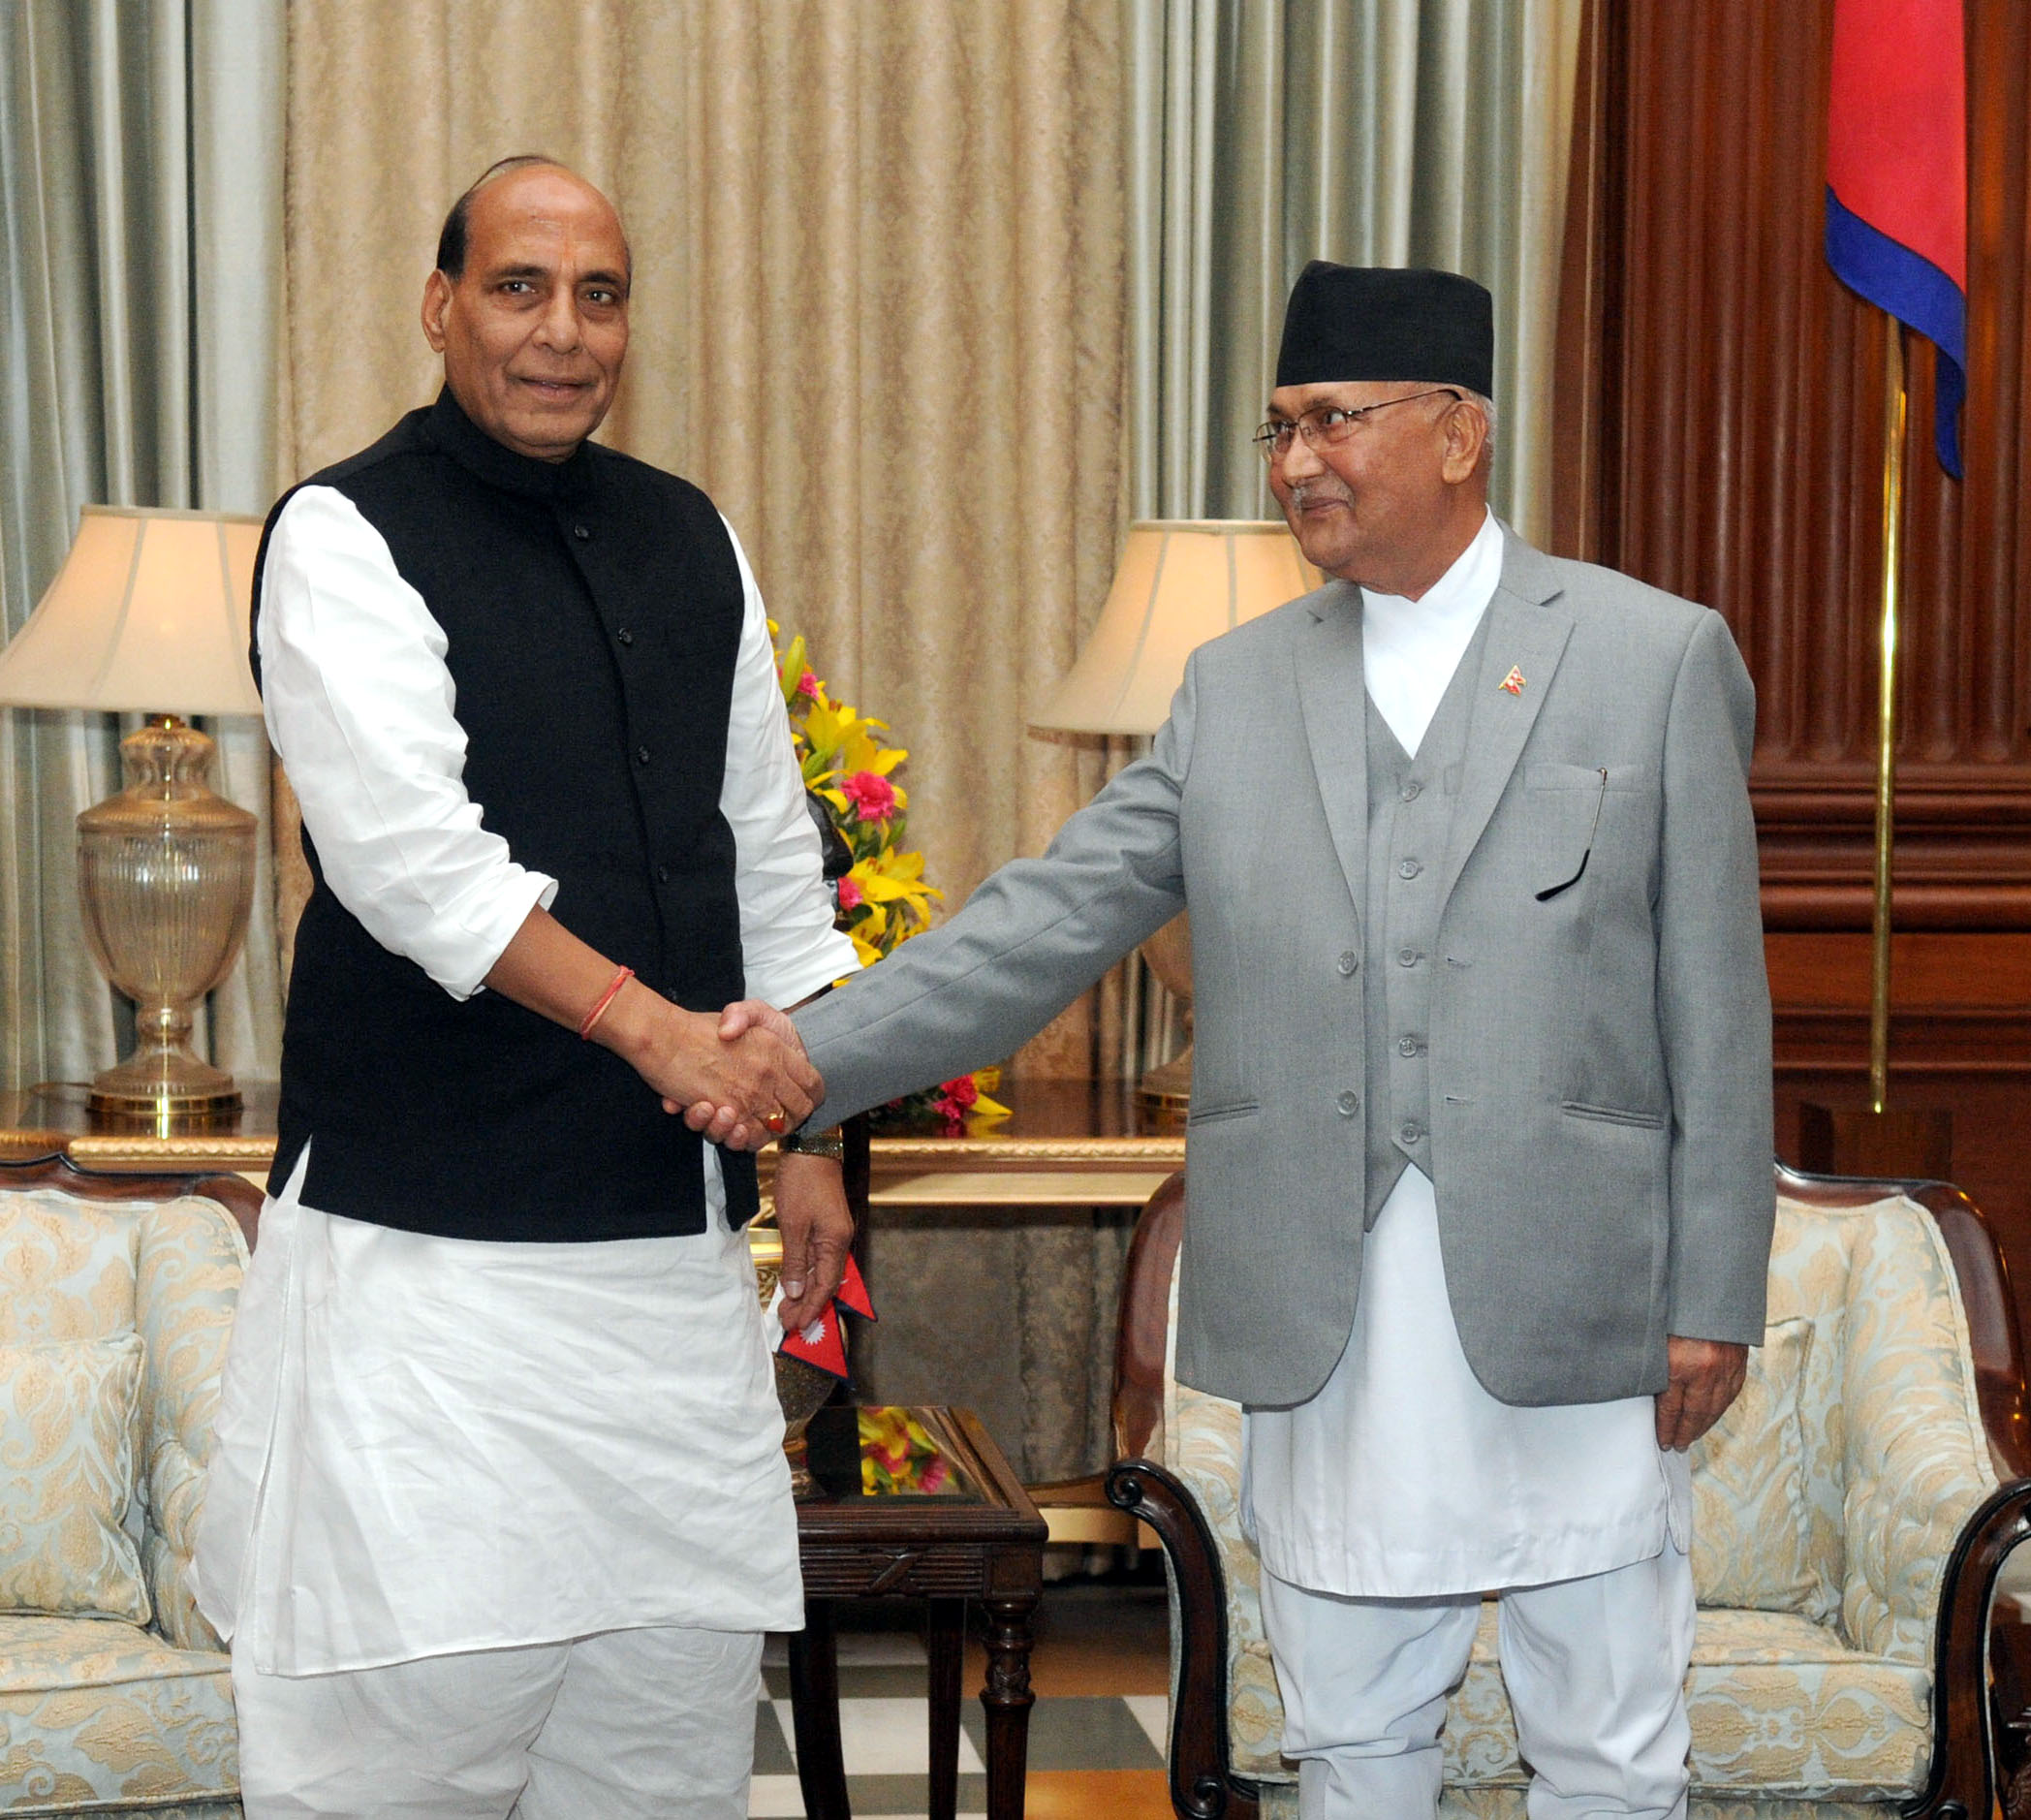 The Union Home Minister, Shri Rajnath Singh calling on the Prime Minister of Nepal, Shri K.P. Sharma Oli, at Rashtrapati Bhavan, in New Delhi on February 20, 2016.